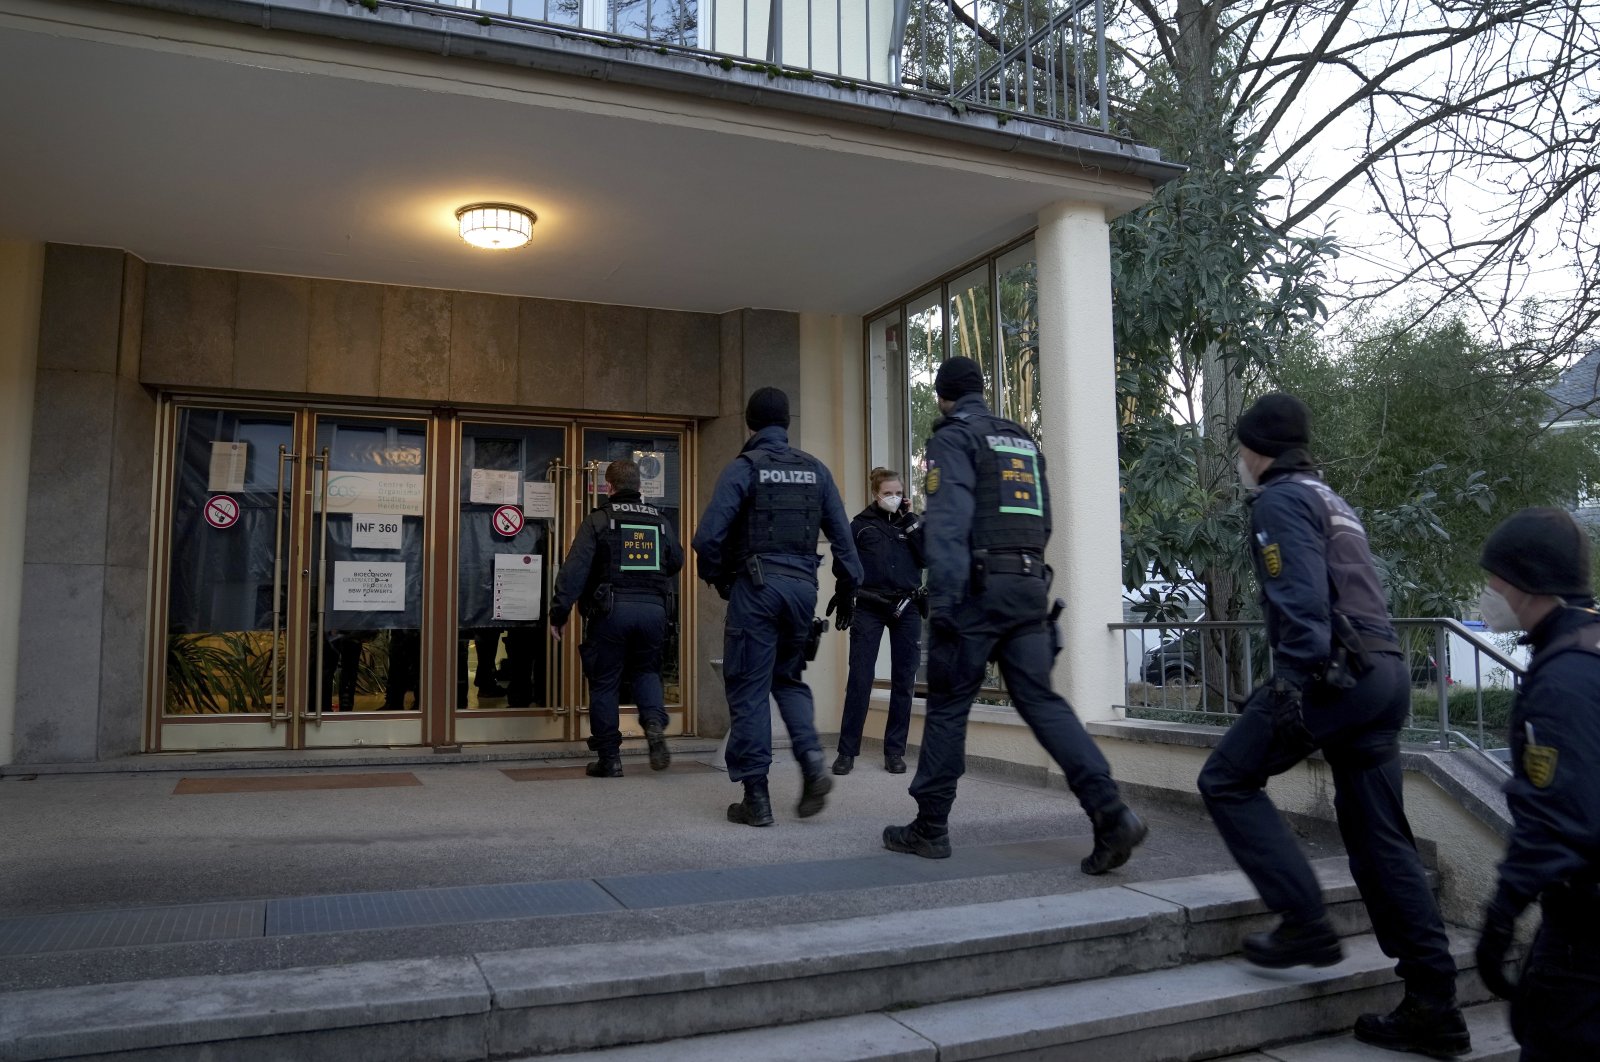 Police officers enter the crime scene on the grounds of the Heidelberg University in Heidelberg, Germany, Jan. 24, 2022. (AP Photo)